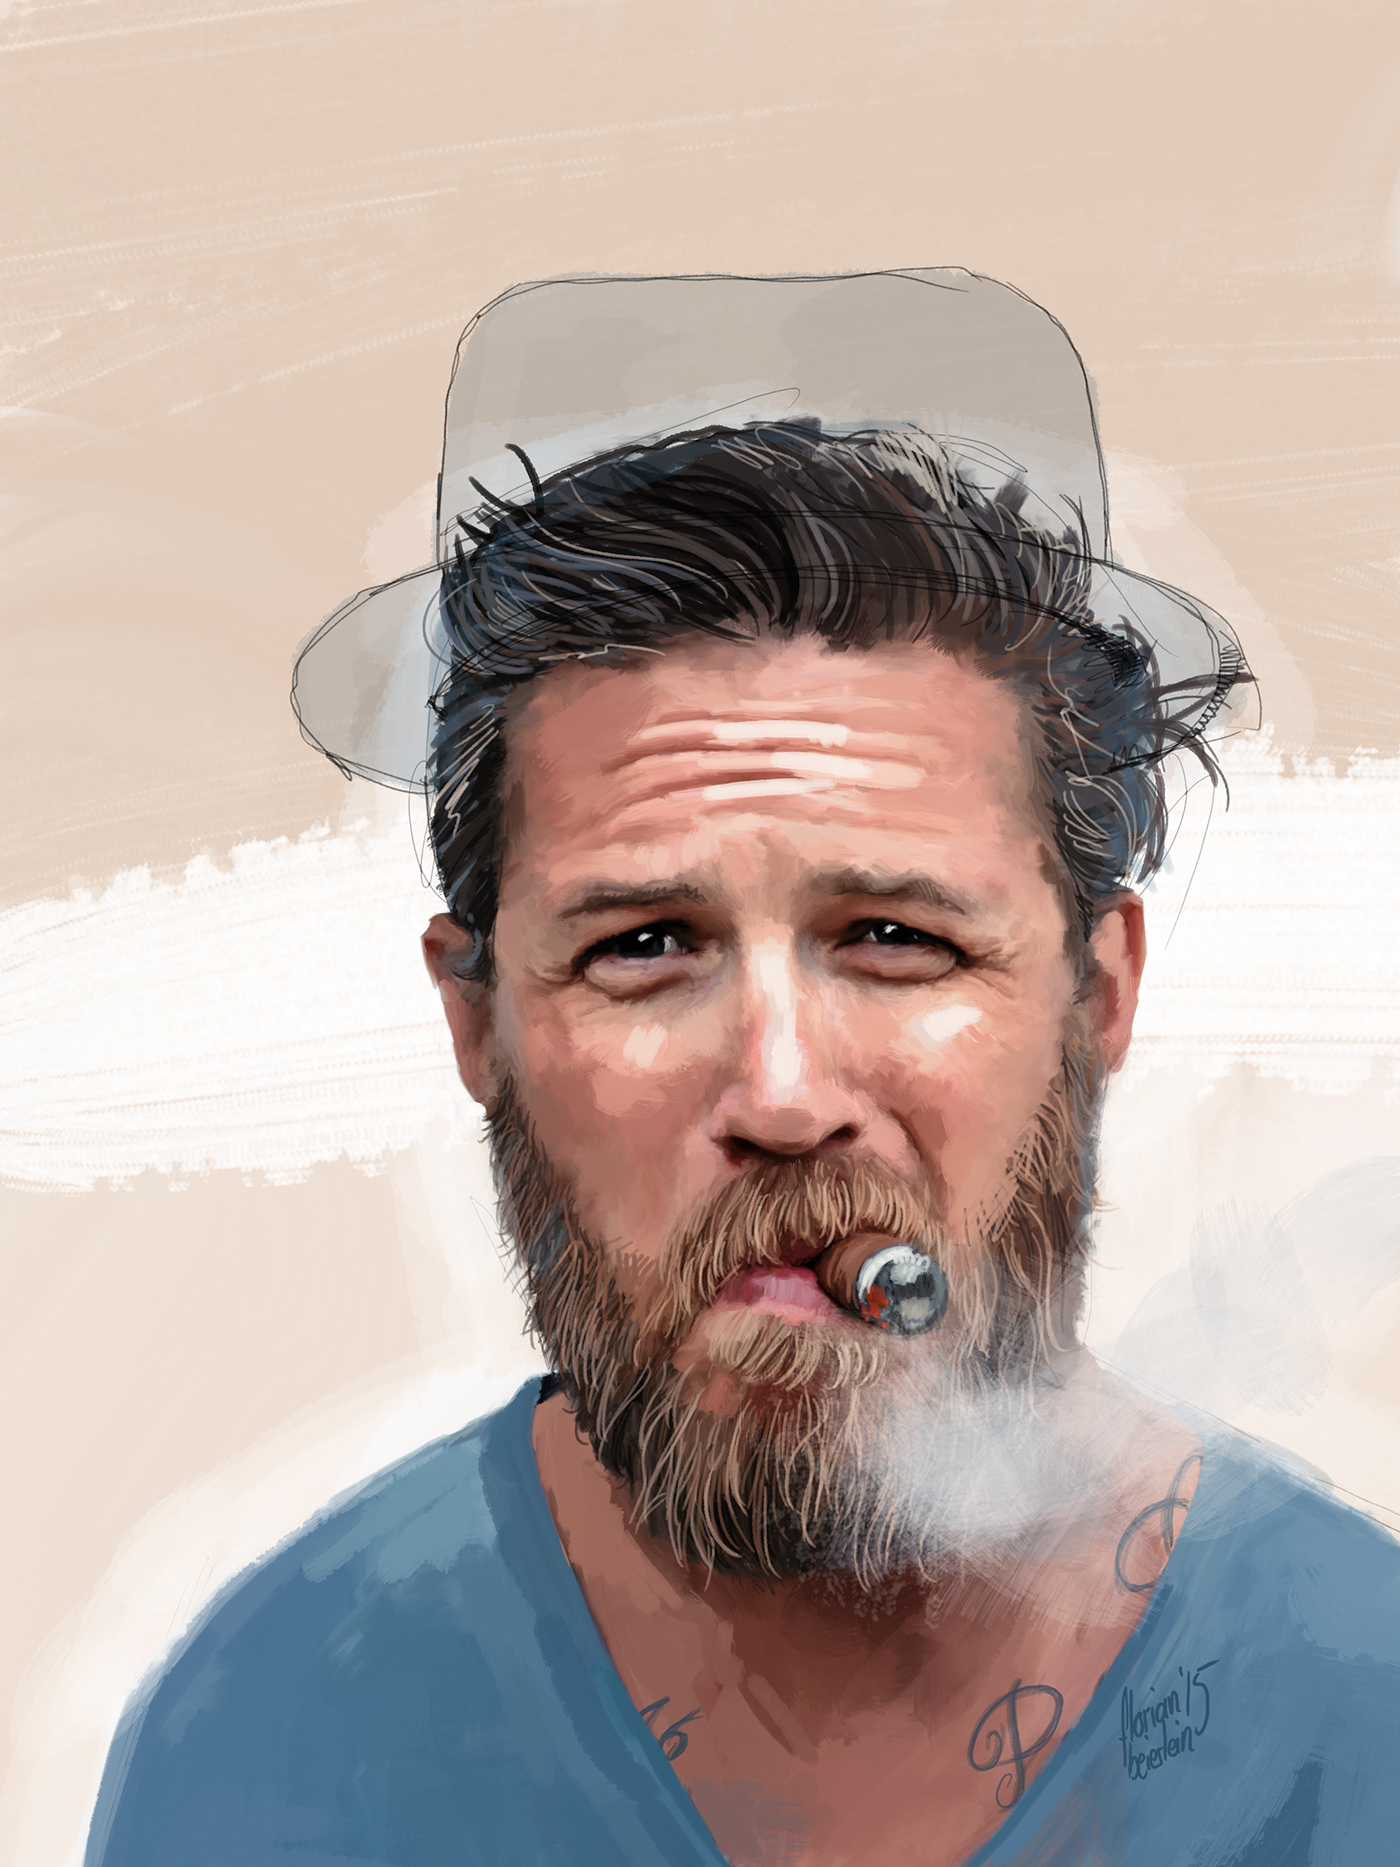 tom hardy beard hat hair smoking smoke wacom companion inspire